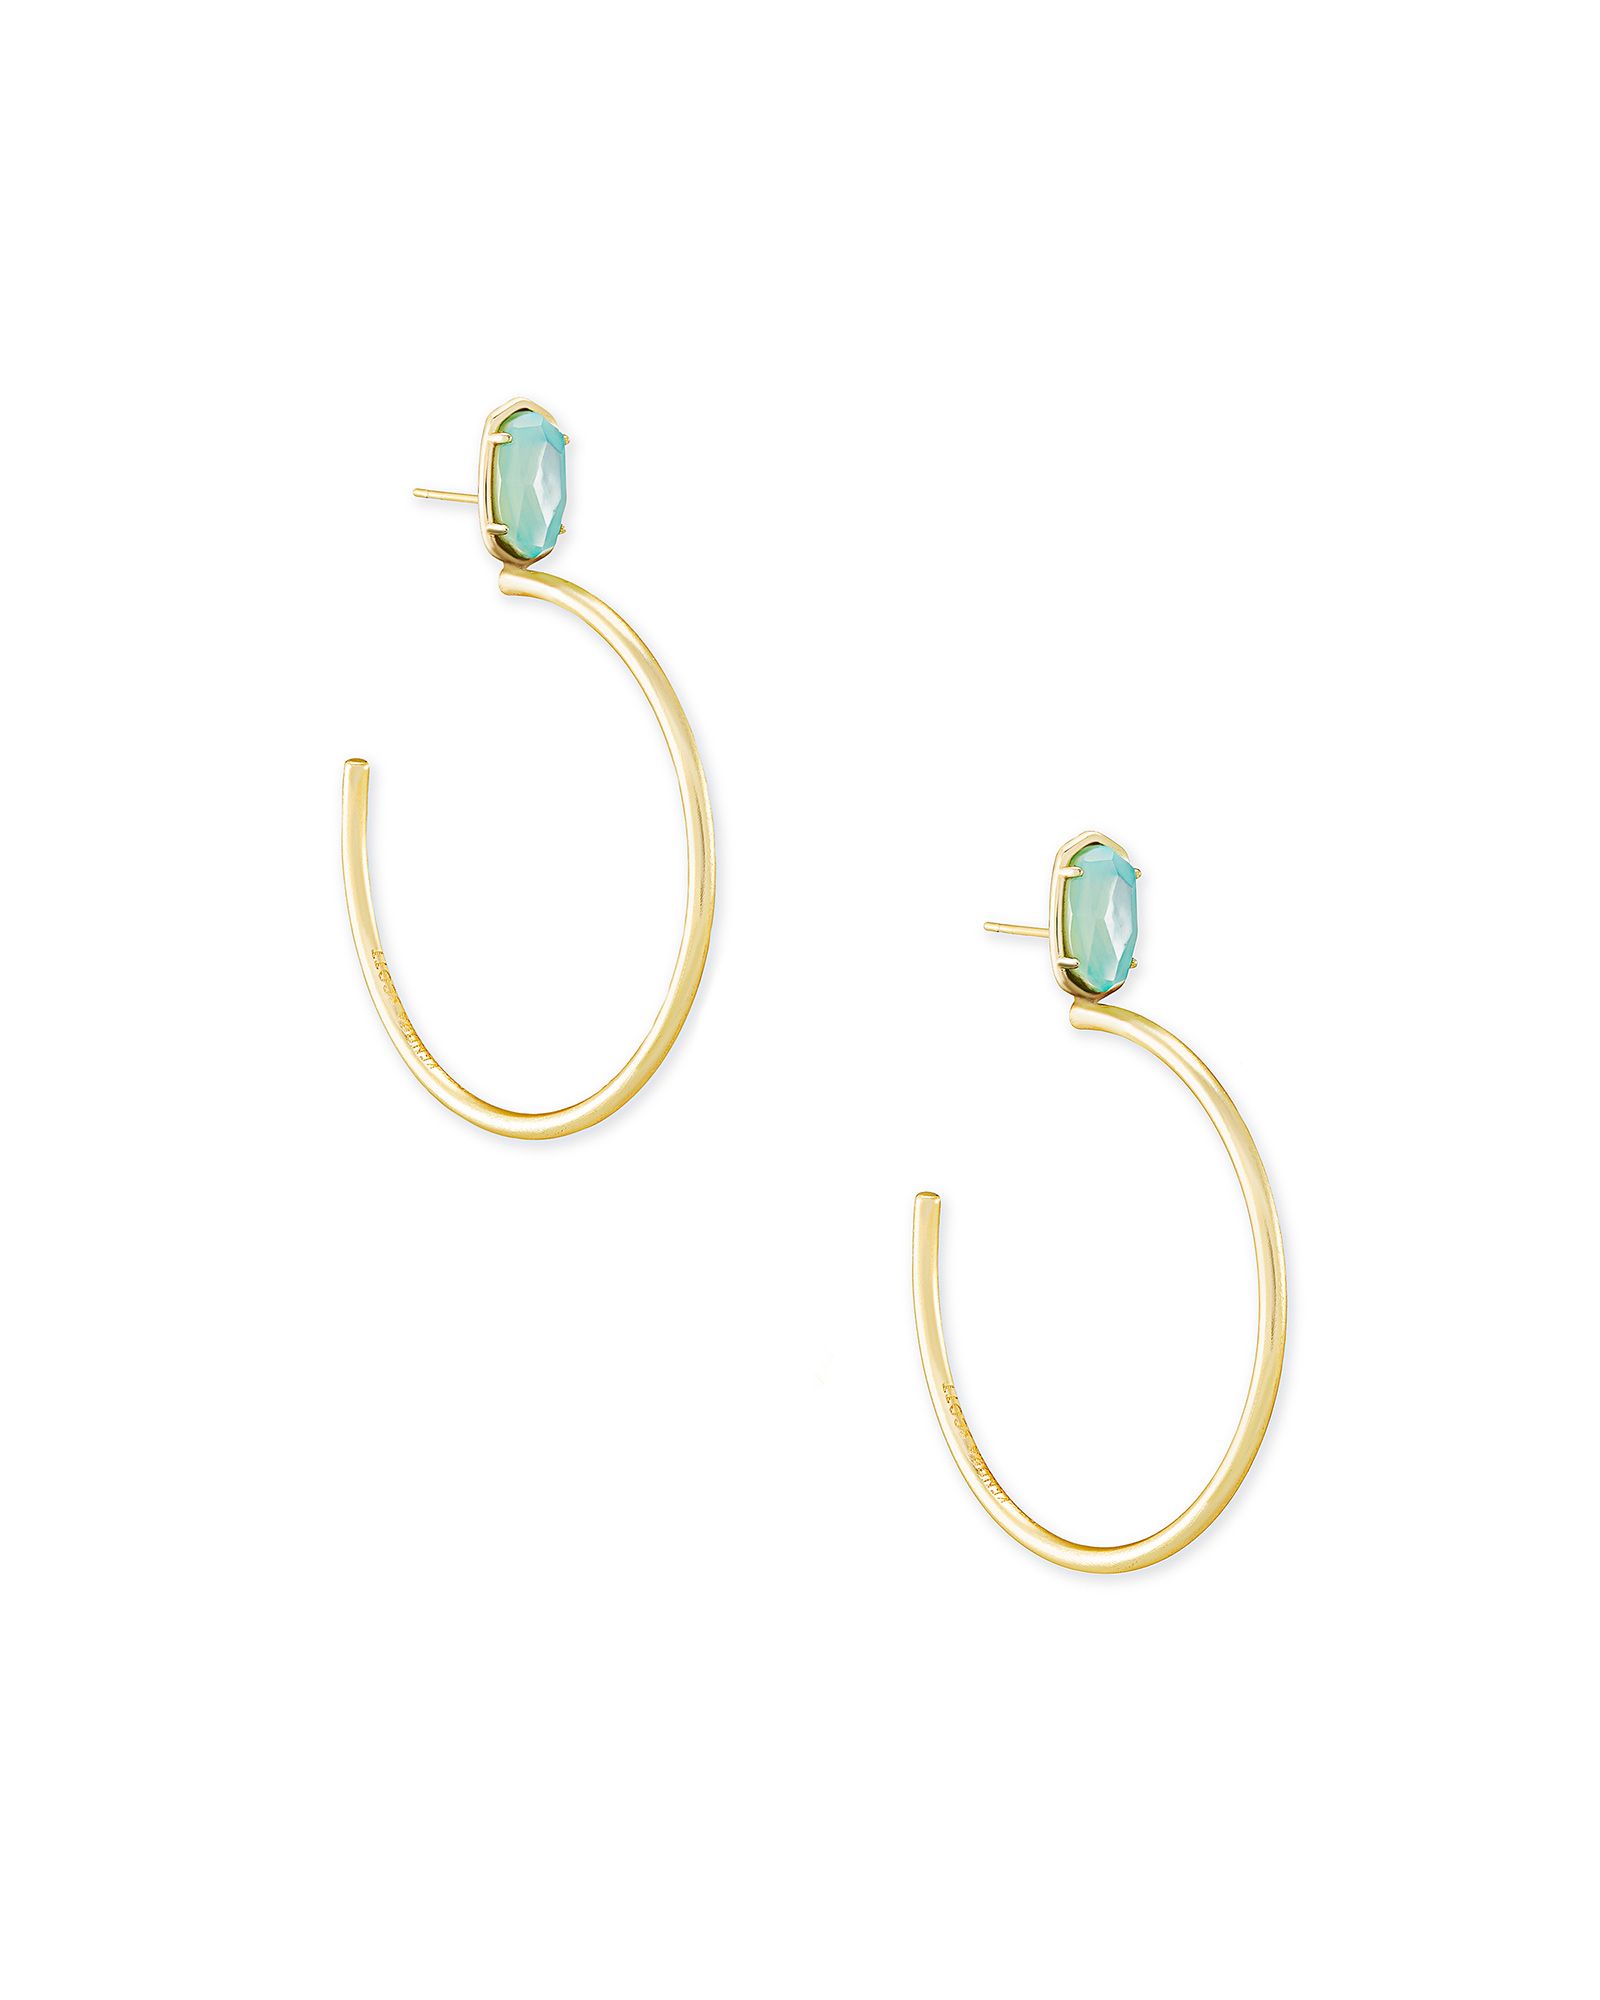 Small Pepper Gold Hoop Earrings in Aqua Illusion | Kendra Scott